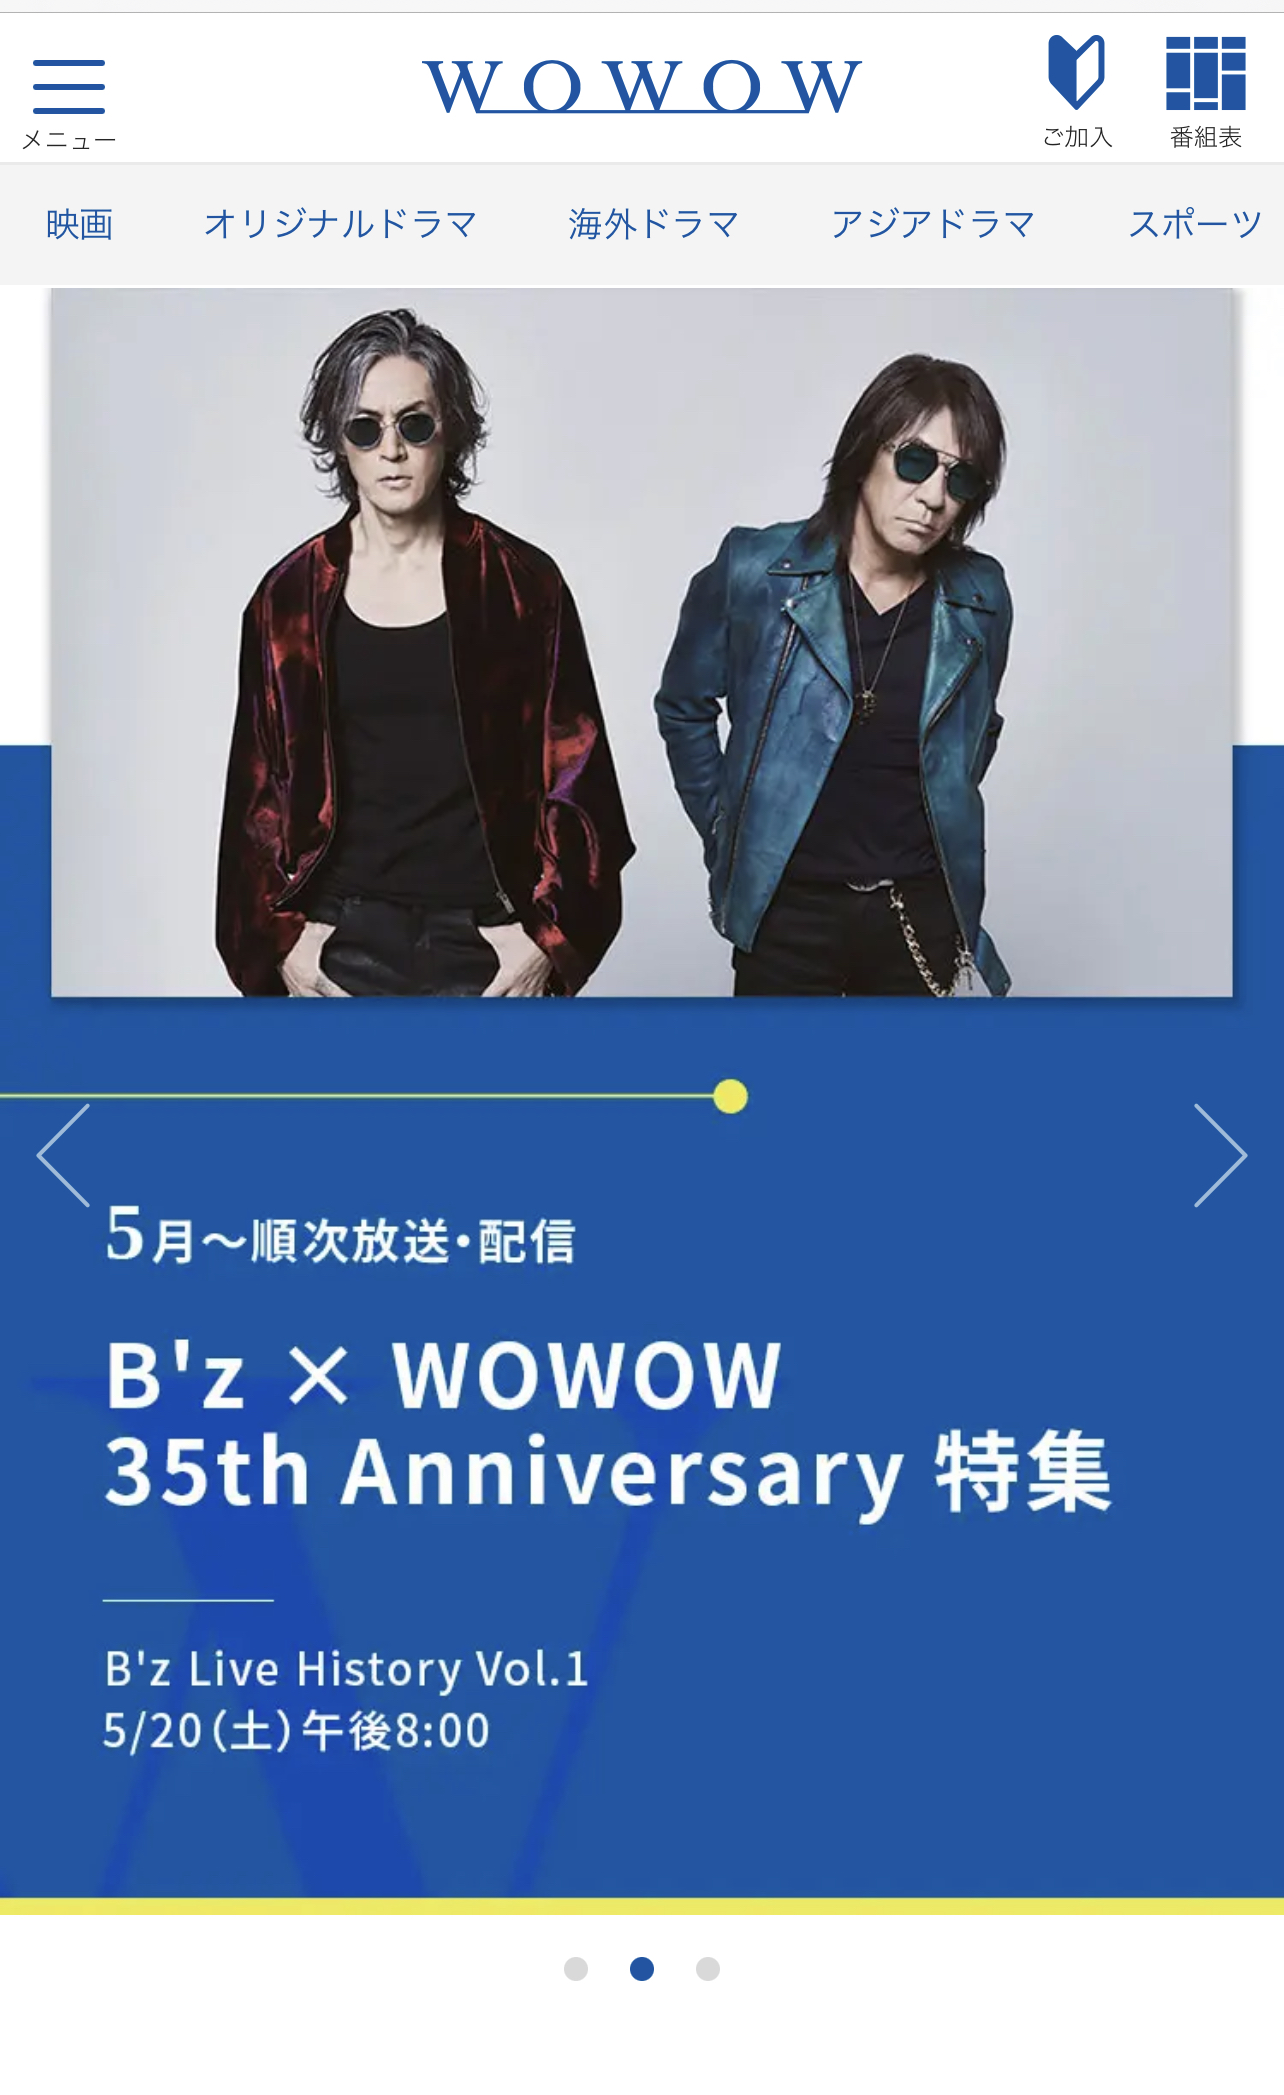 B'z × WOWOW 35th Anniversary 特集『B'z Live History』を告知する公式サイトのキャプチャ